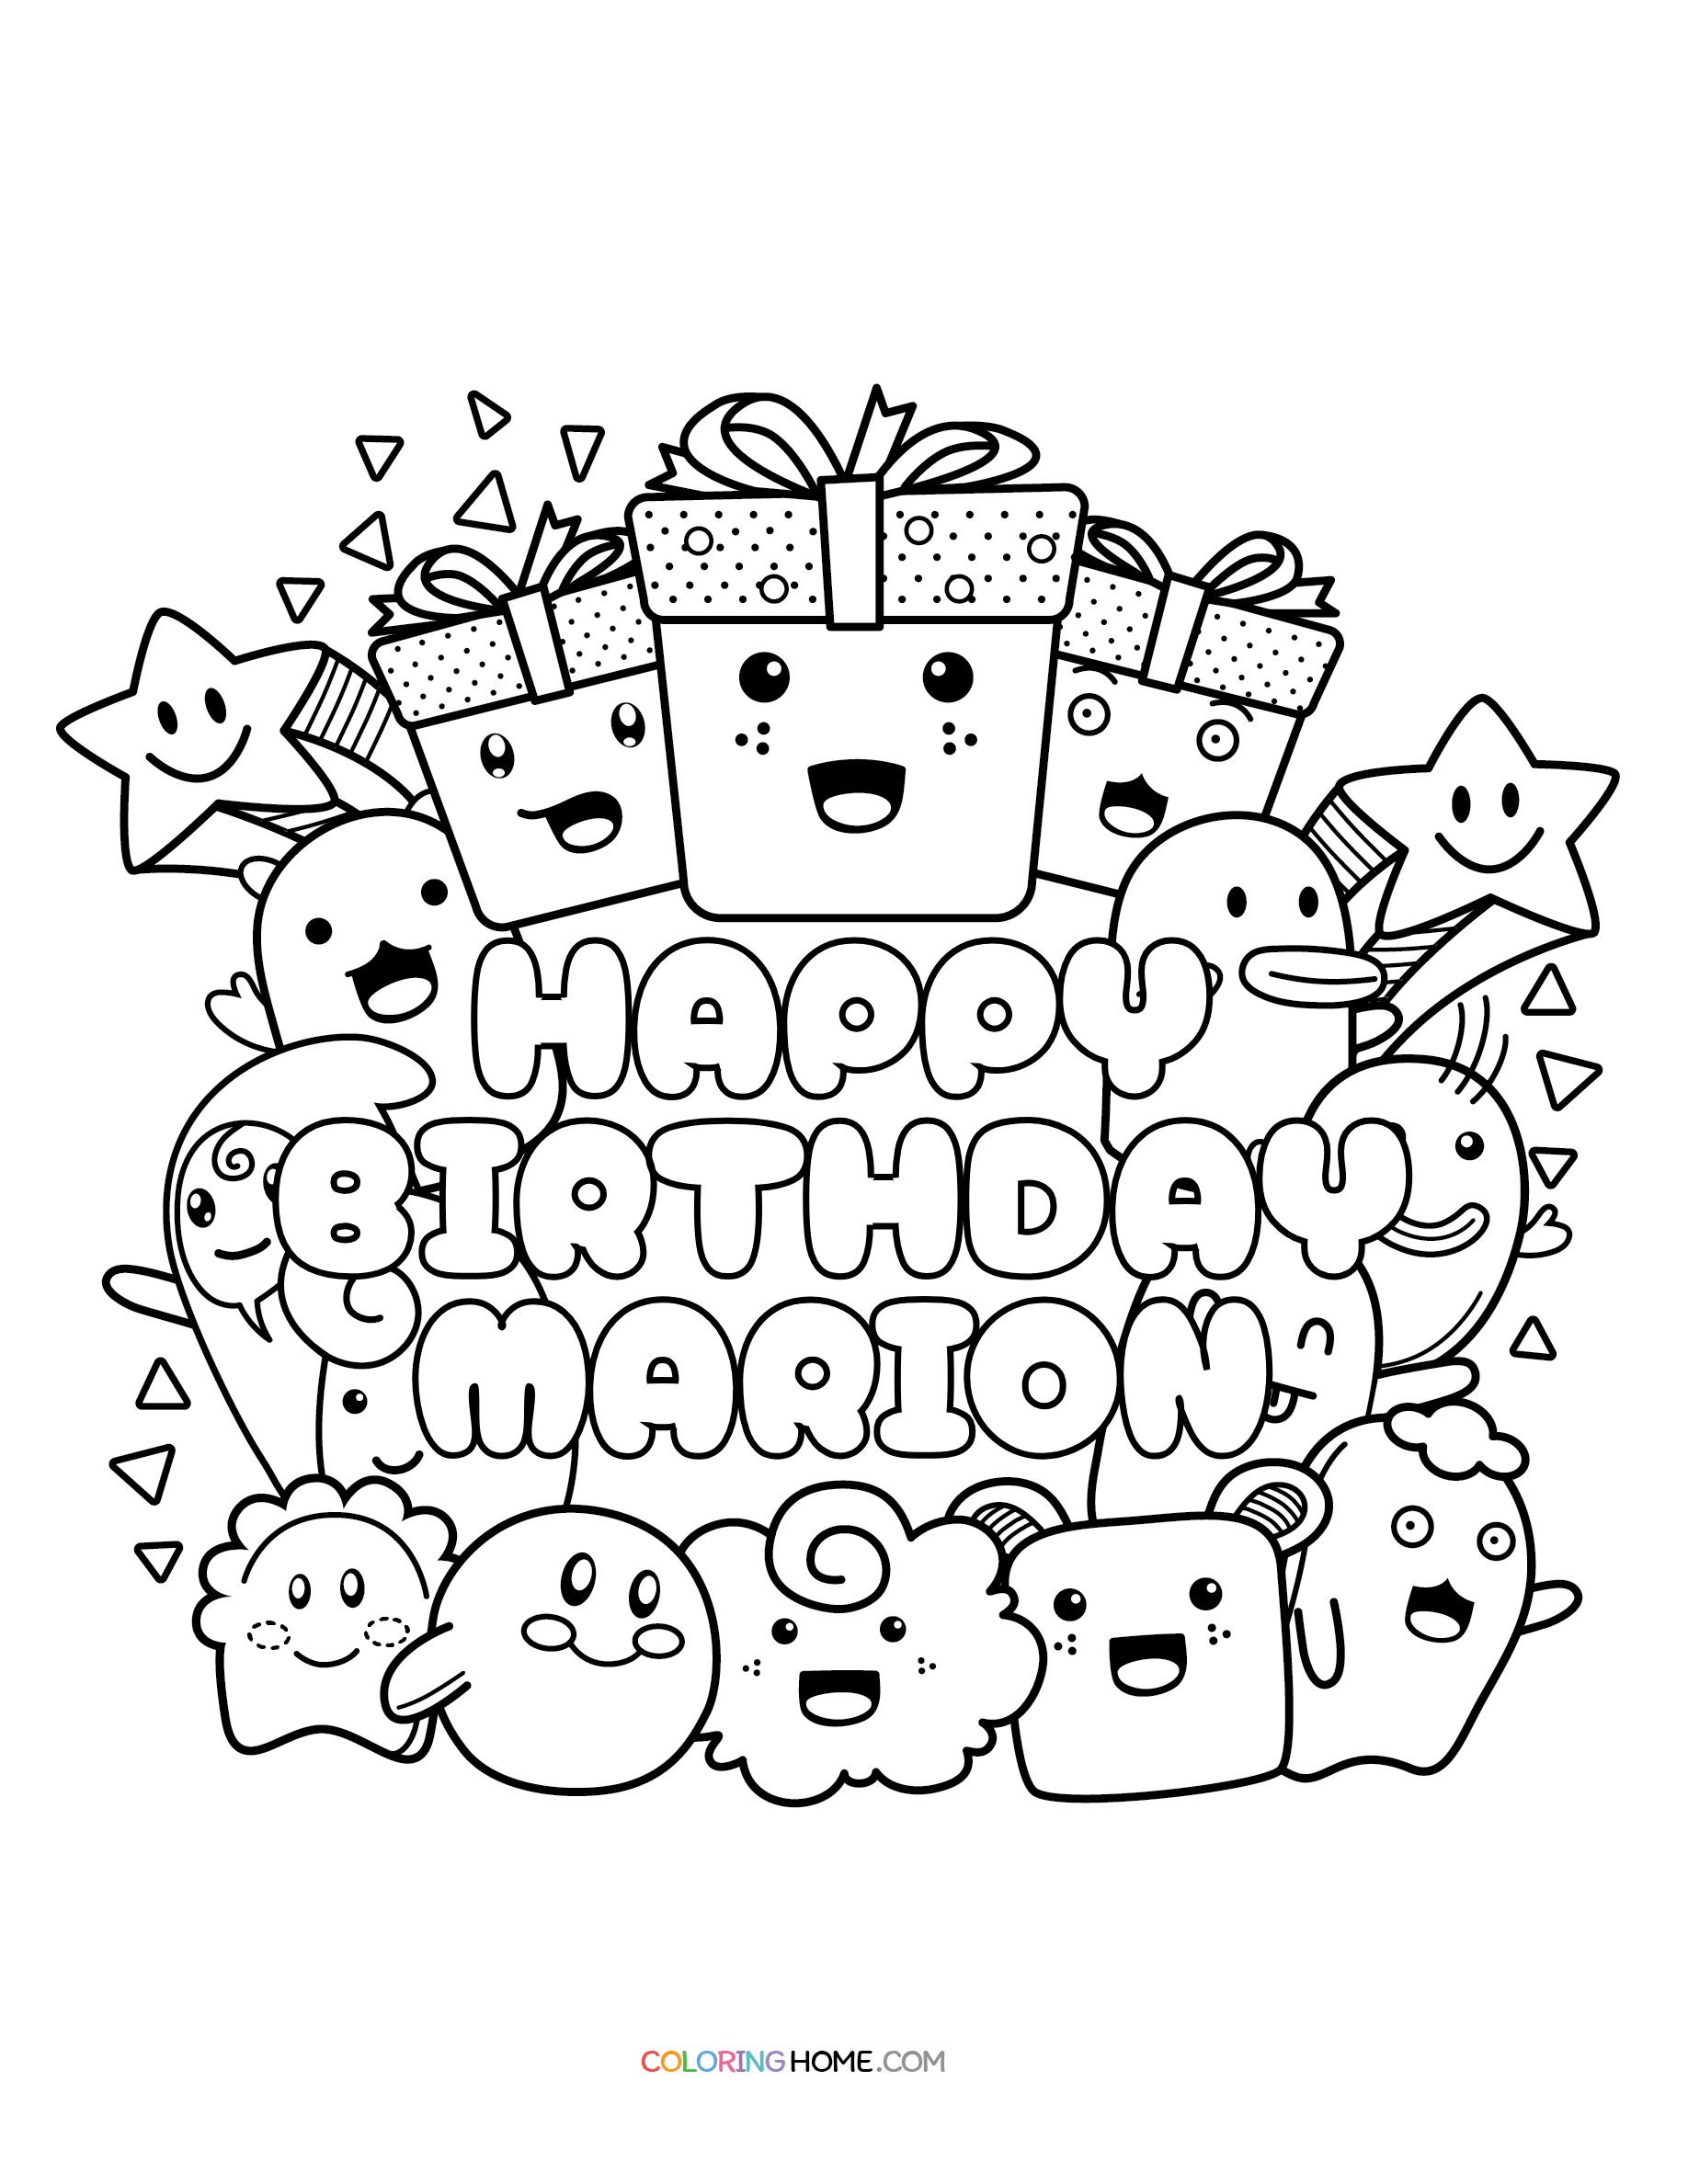 Happy Birthday Marion coloring page